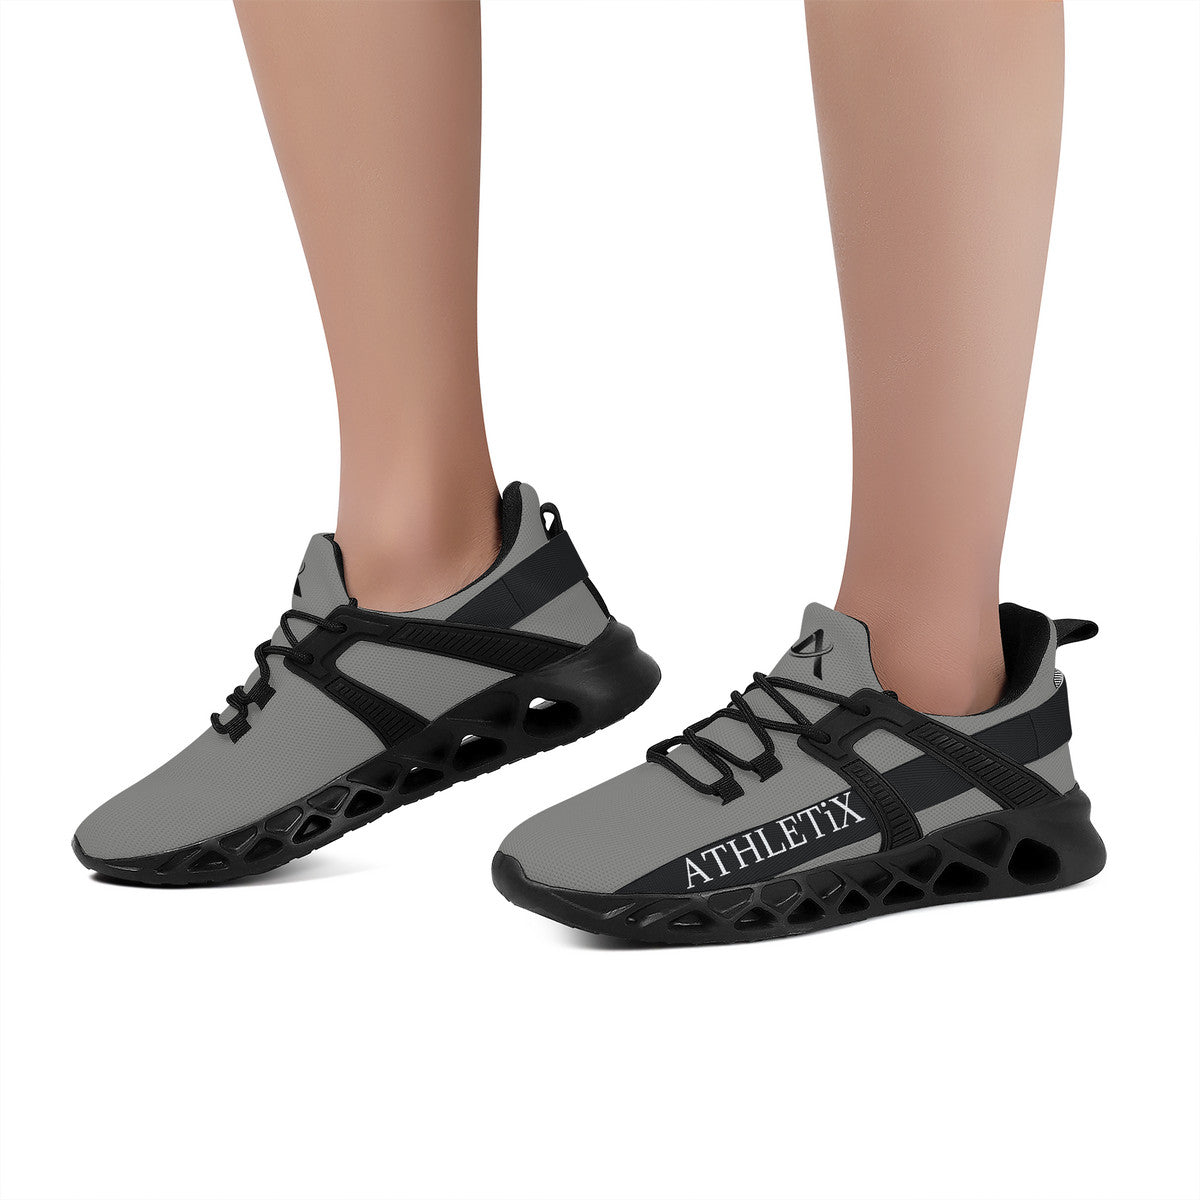 ATHLETiX New Elastic Sport Sneakers (in 4 colors)